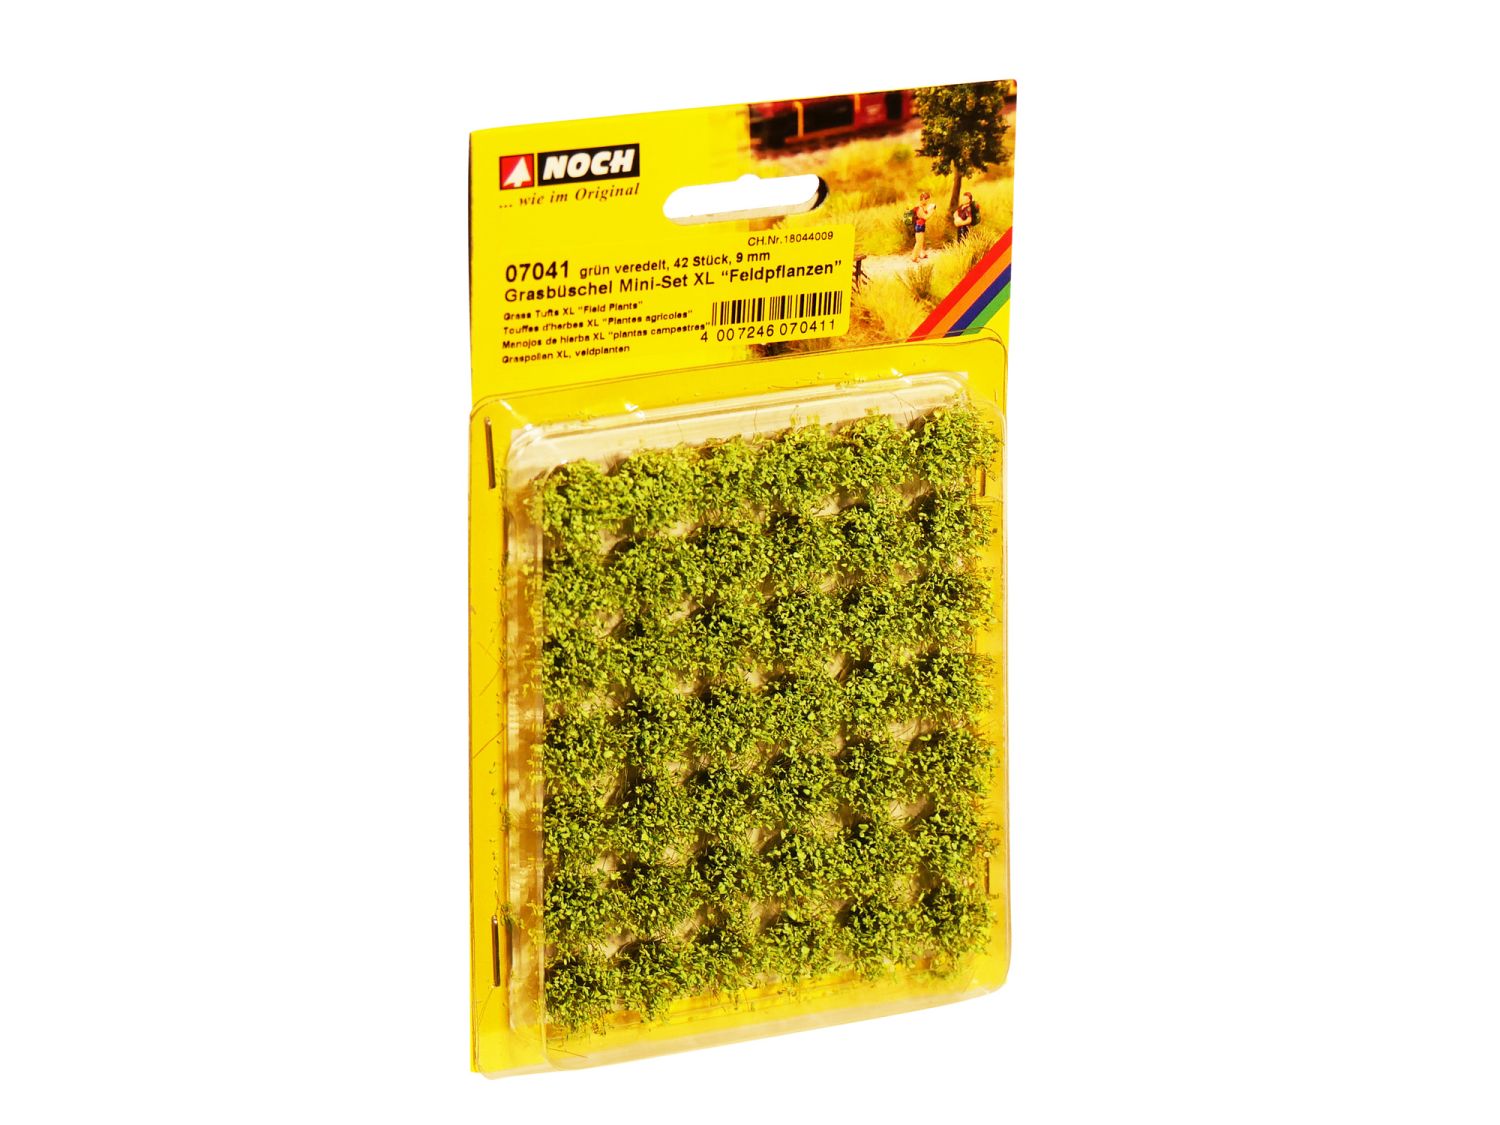 Noch 07041 - Grasbüschel Mini-Set XL 'Feldpflanzen' grün, 42x 9 mm